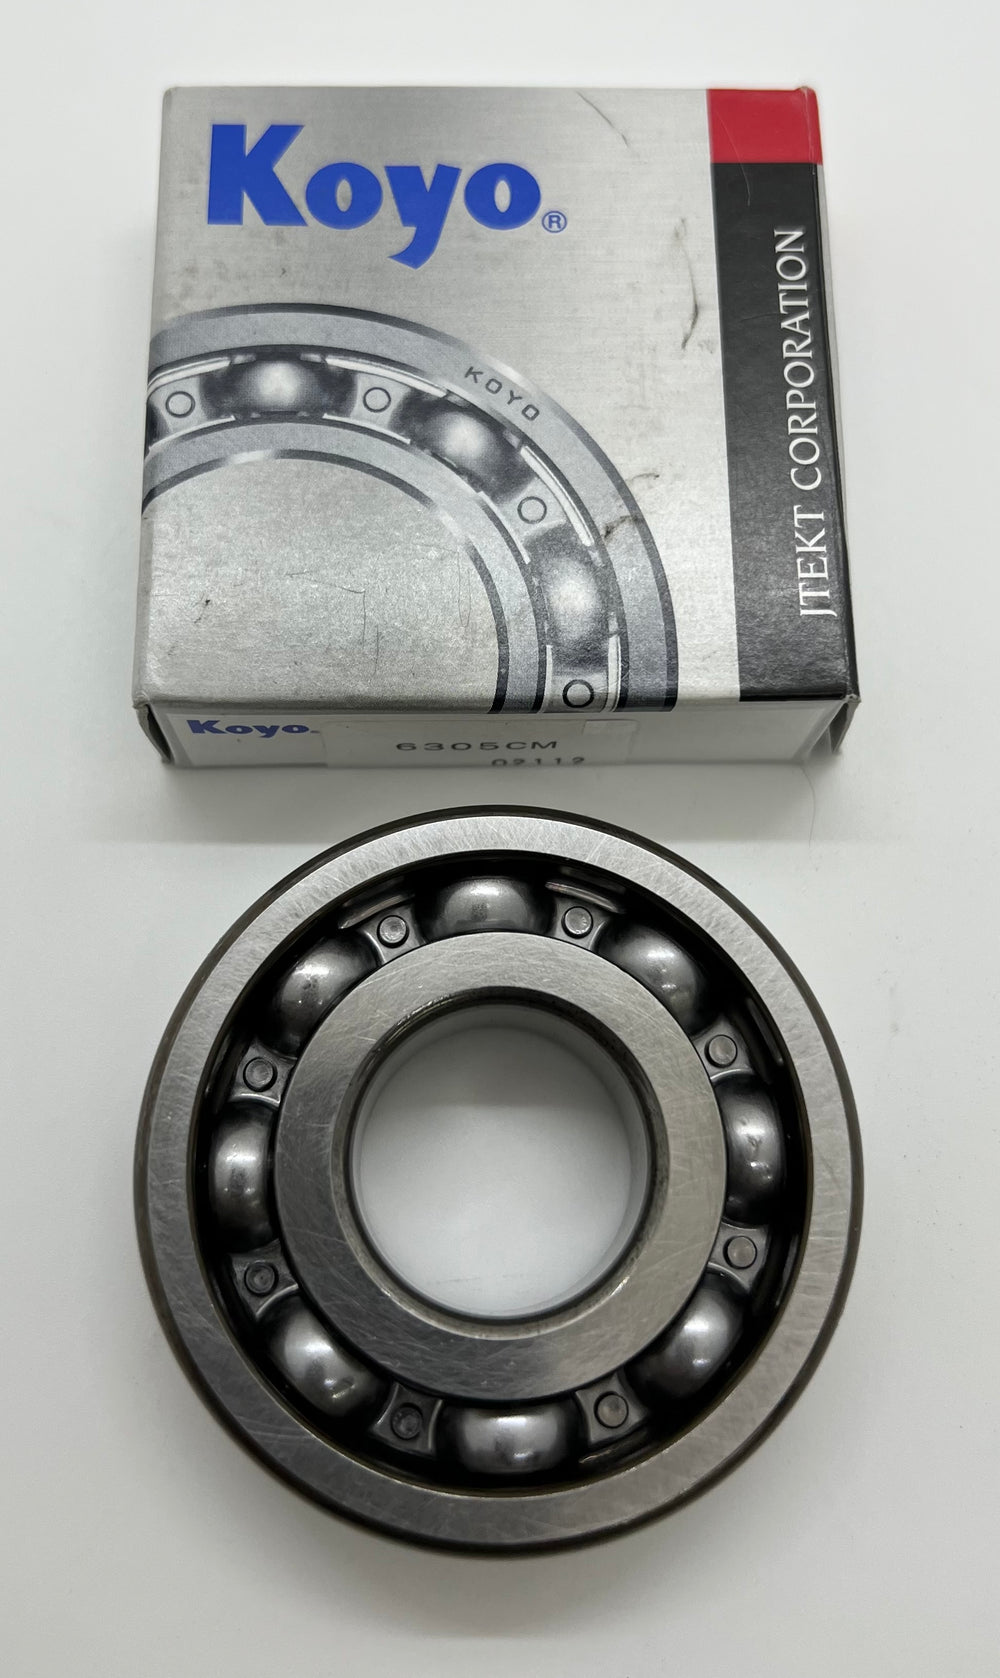 New Crankshaft main bearing very high quality KOYO bearing from Japan